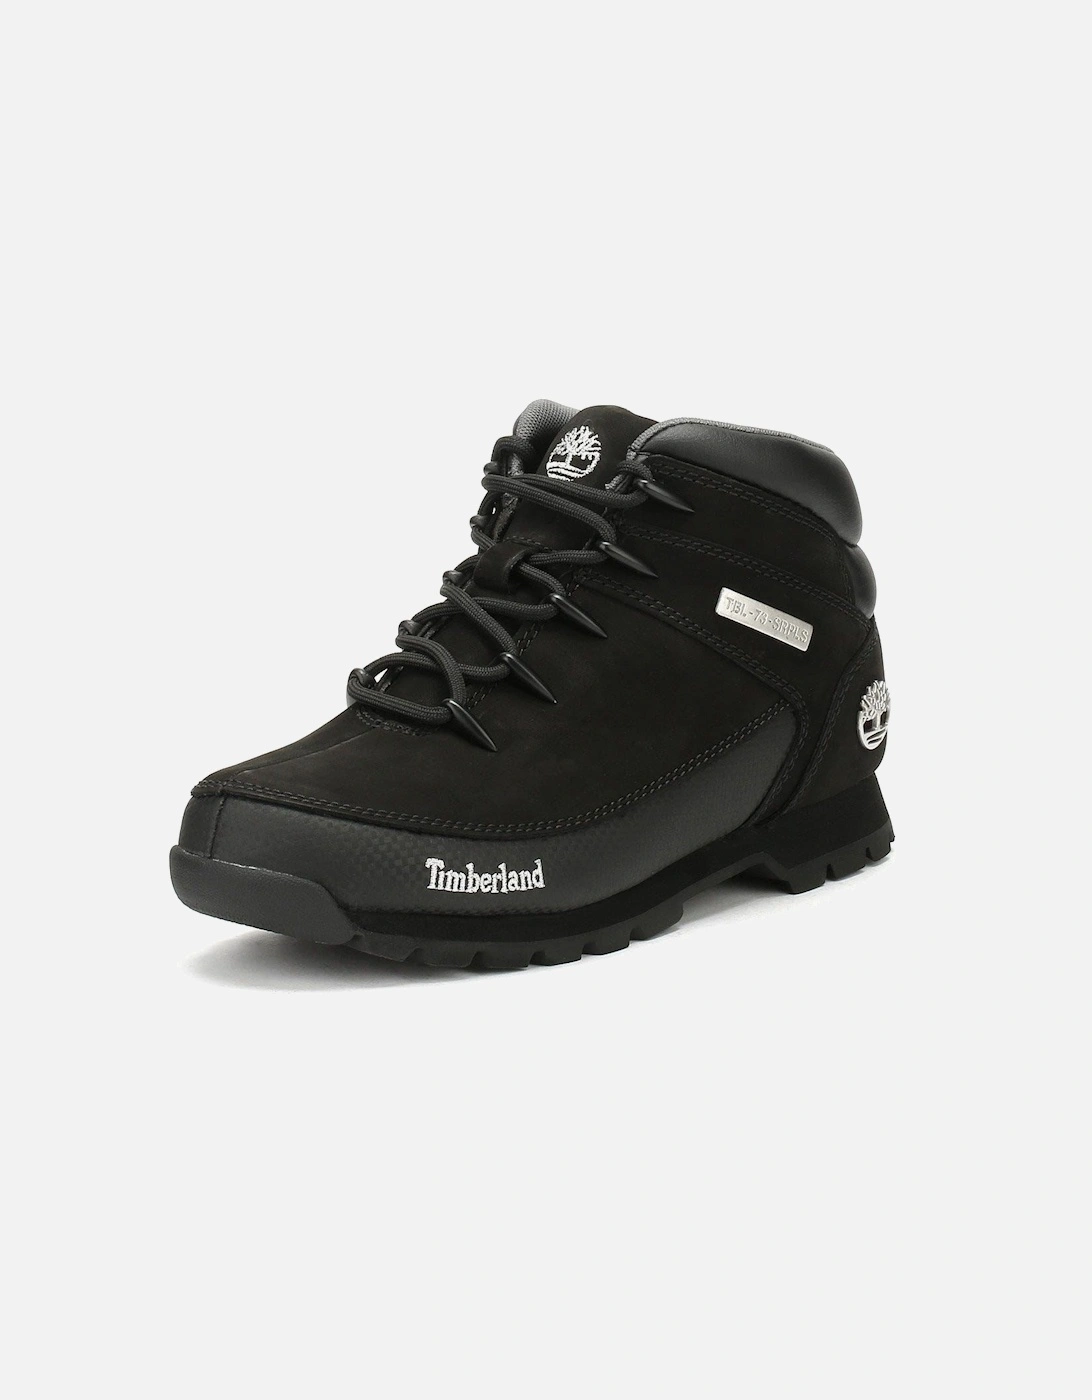 Euro Sprint Hiker Men's Black Boots